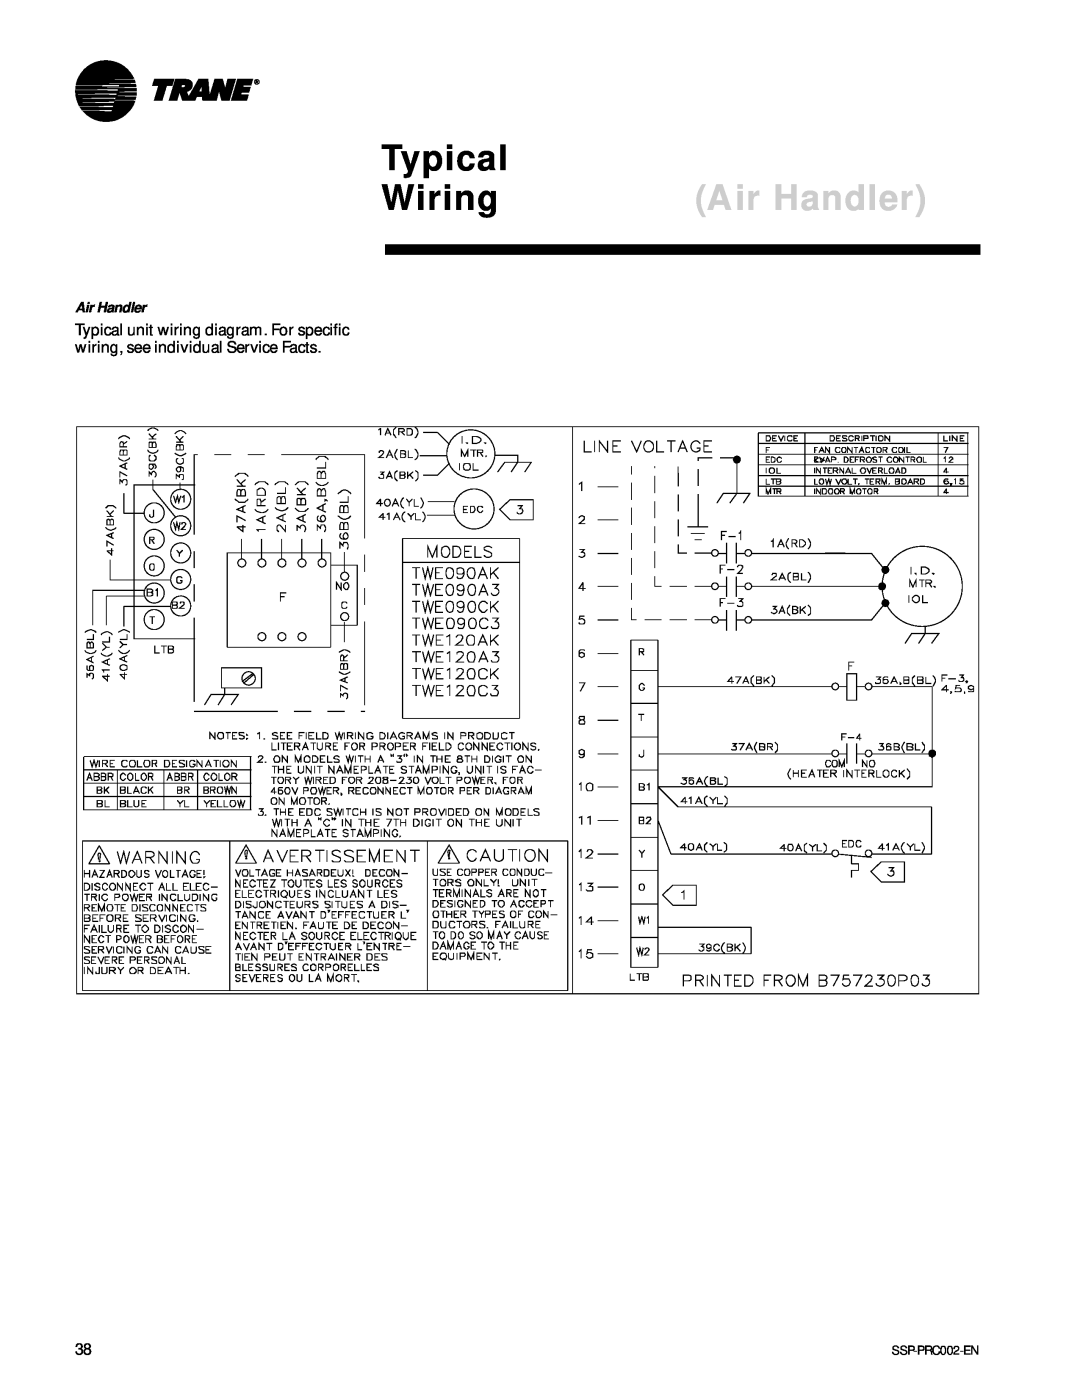 Trane TWA200B, TWA075A, TWE200B, TWE050A manual Air Handler, Typical, Wiring 